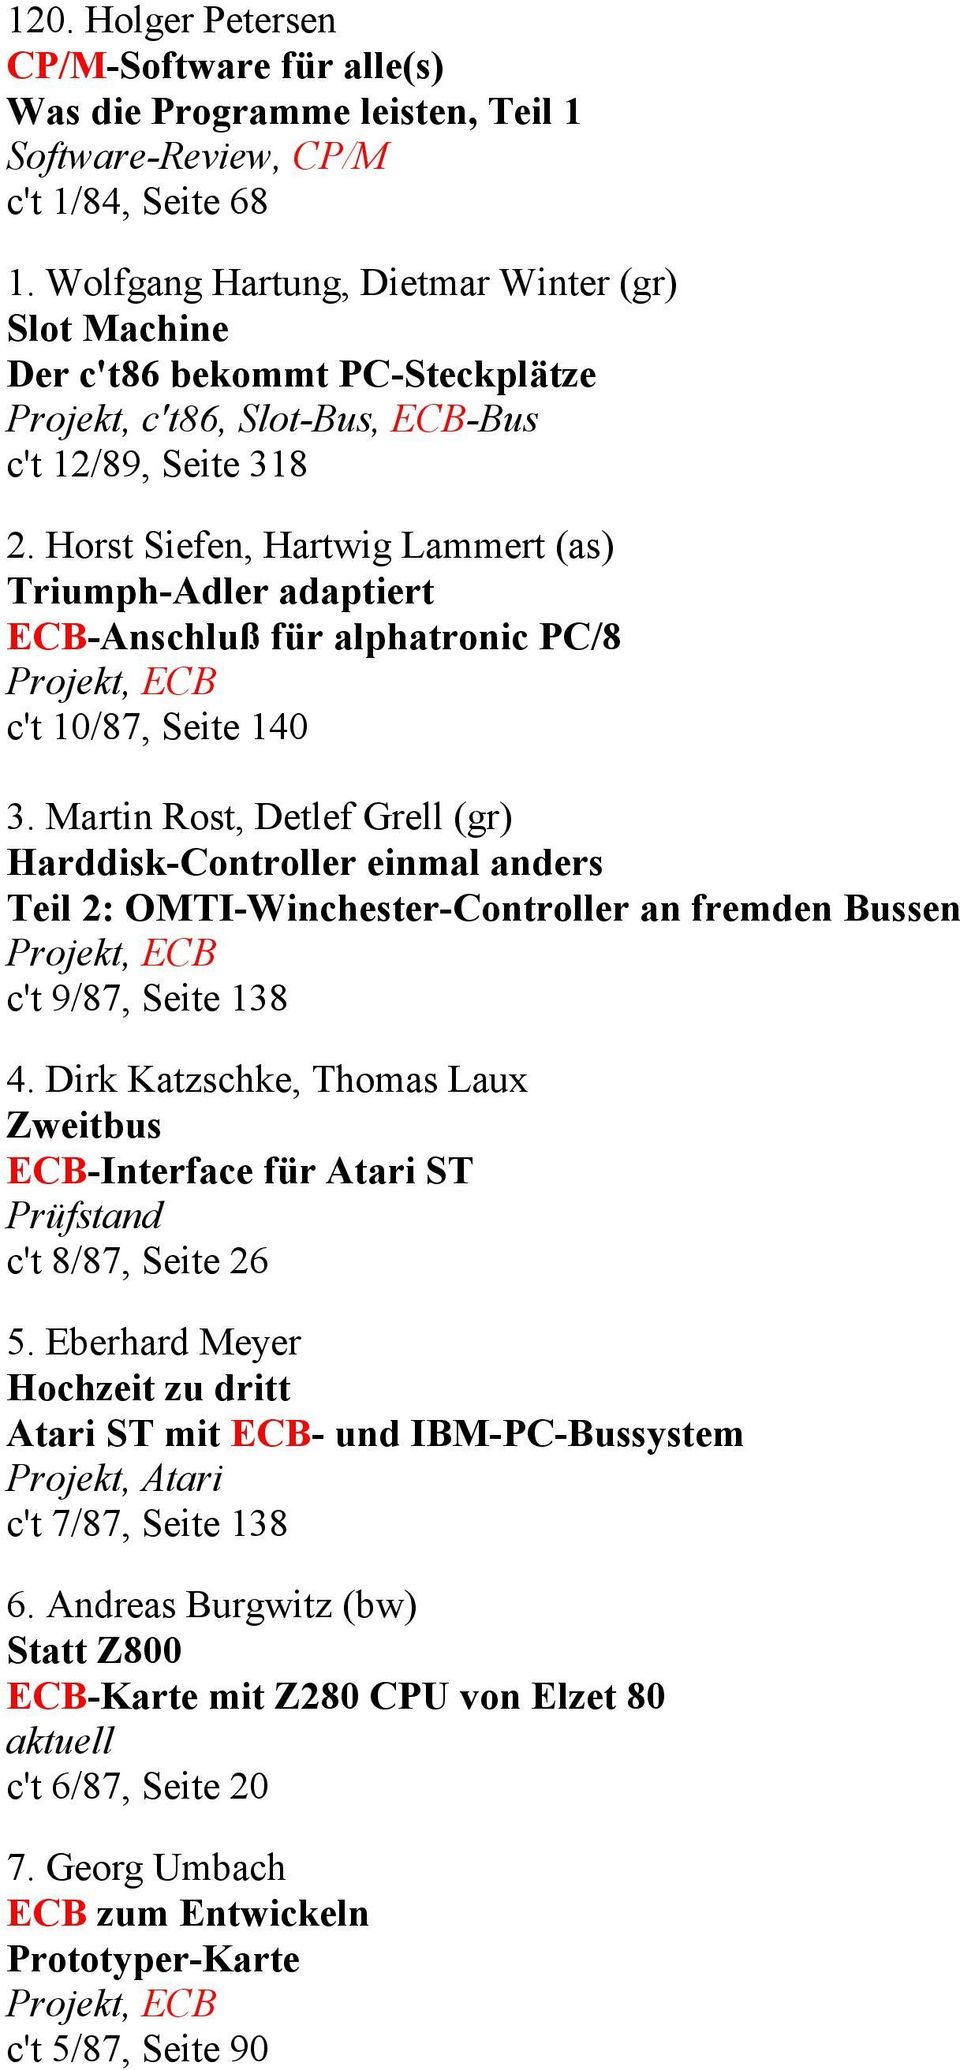 Horst Siefen, Hartwig Lammert (as) Triumph-Adler adaptiert ECB-Anschluß für alphatronic PC/8 c't 10/87, Seite 140 3.